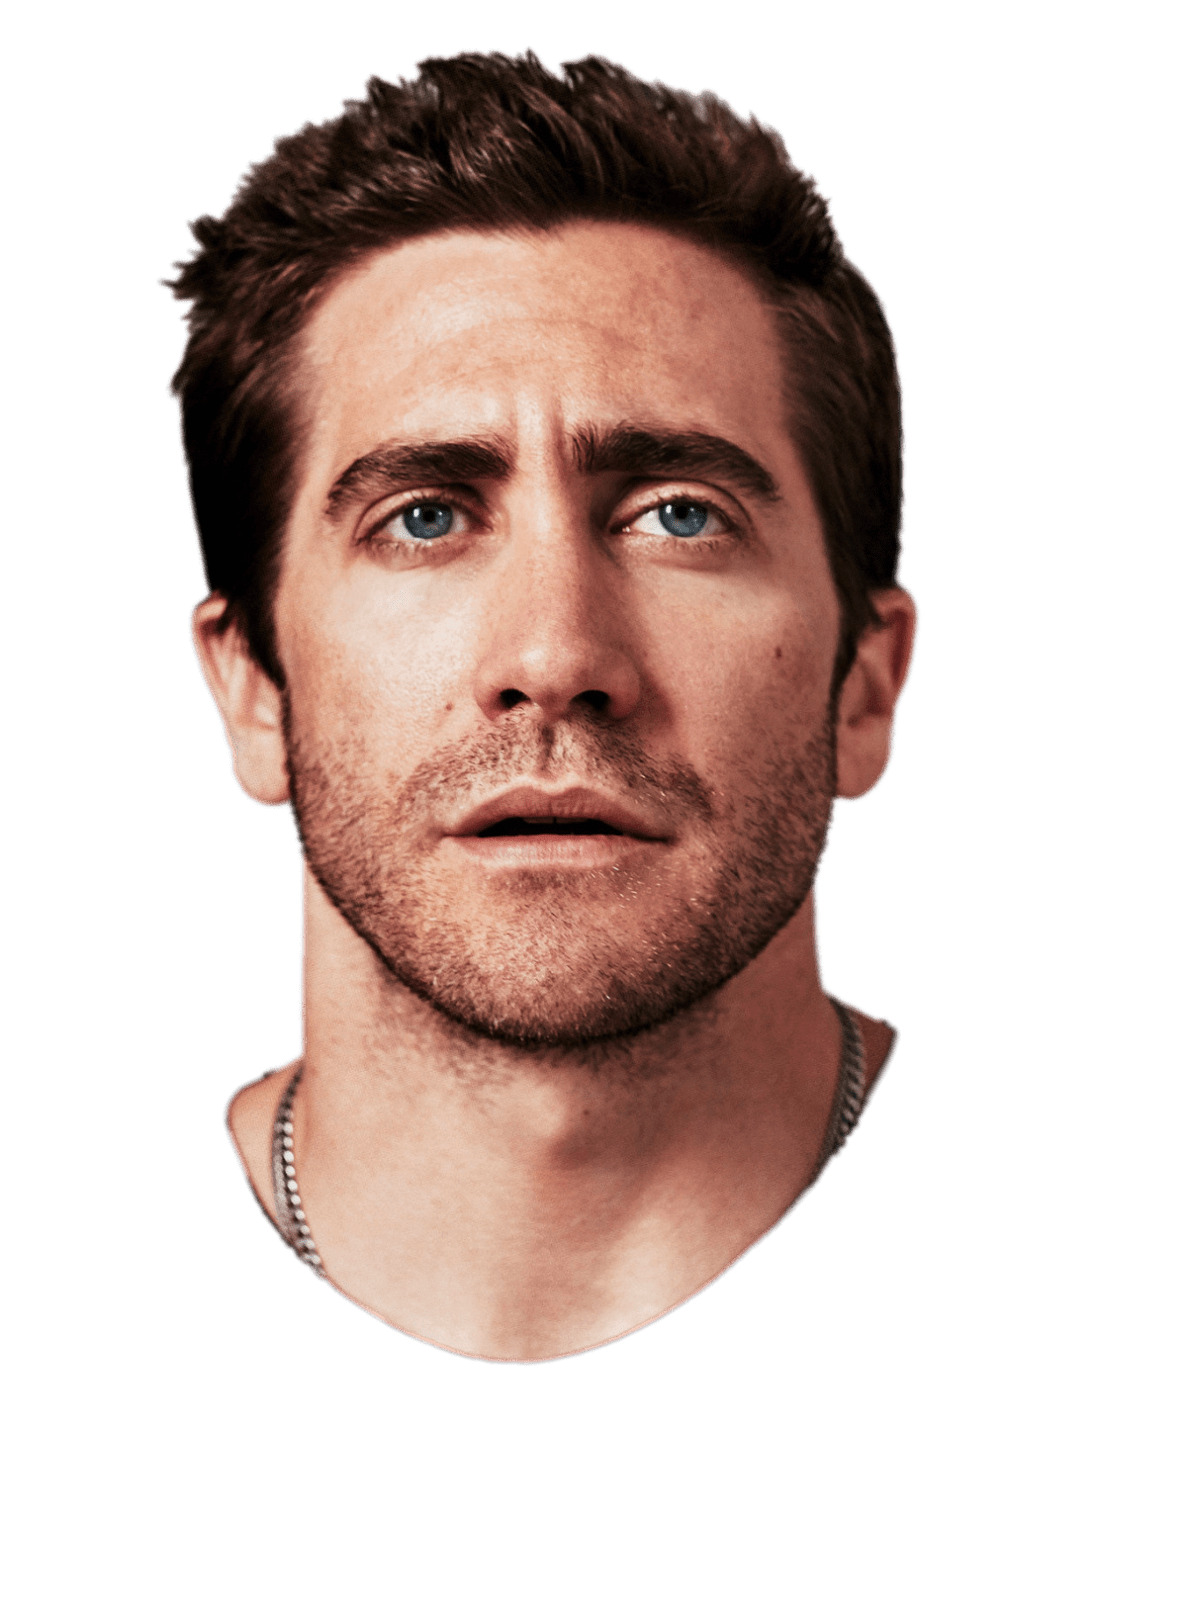 Jake Gyllenhaal Looking Up icons